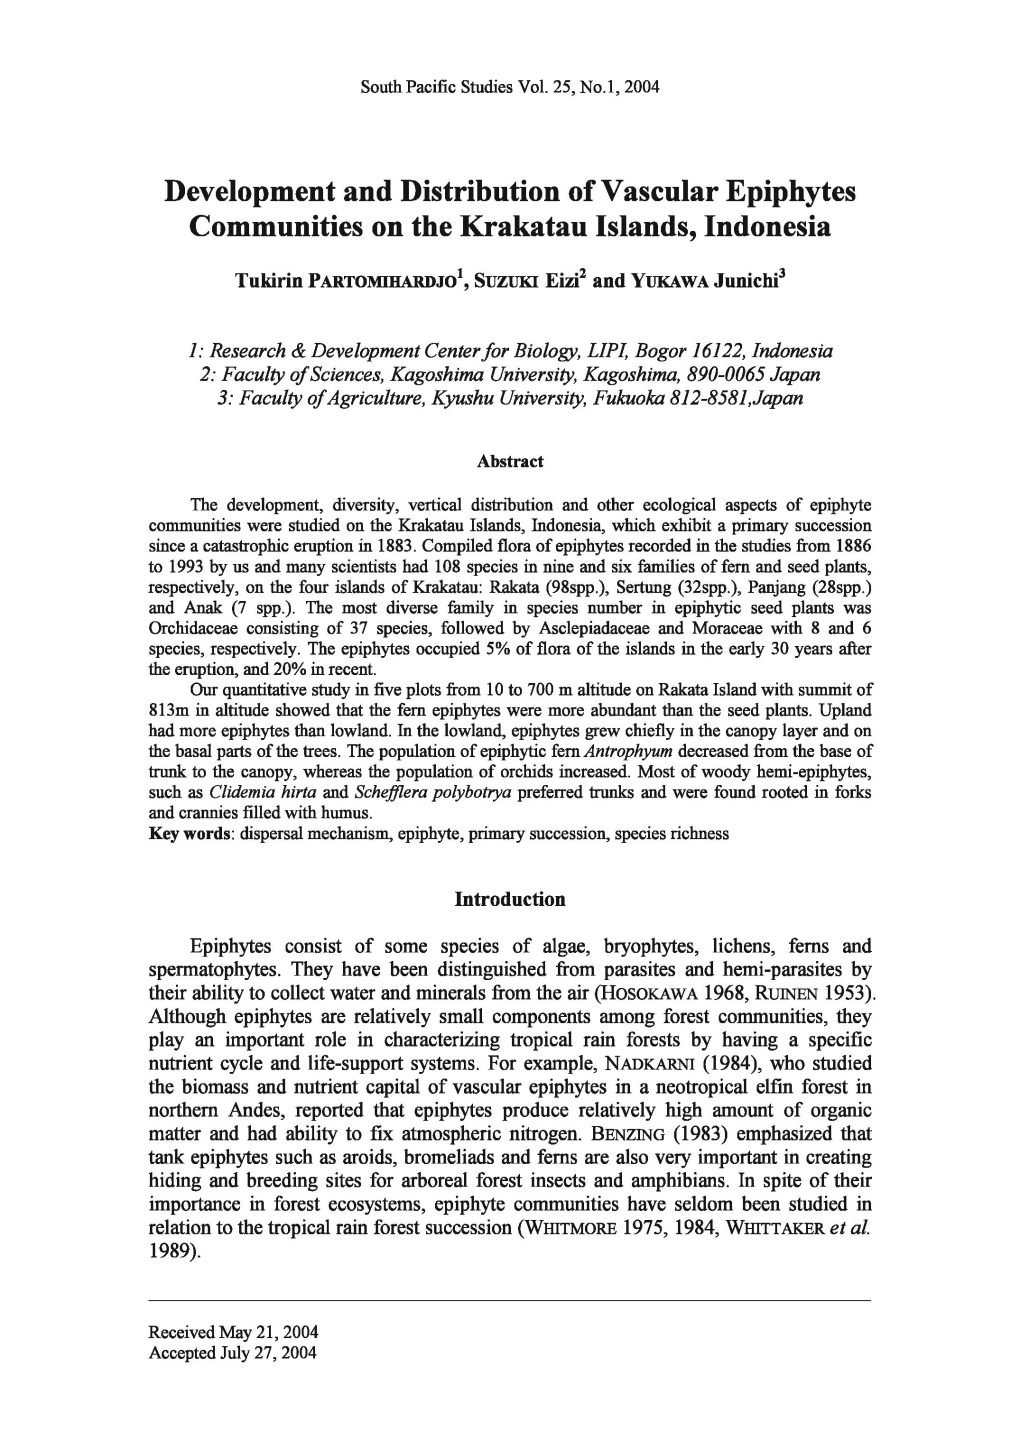 Development and Distribution of Vascular Epiphytes Communities on the Krakatau Islands, Indonesia